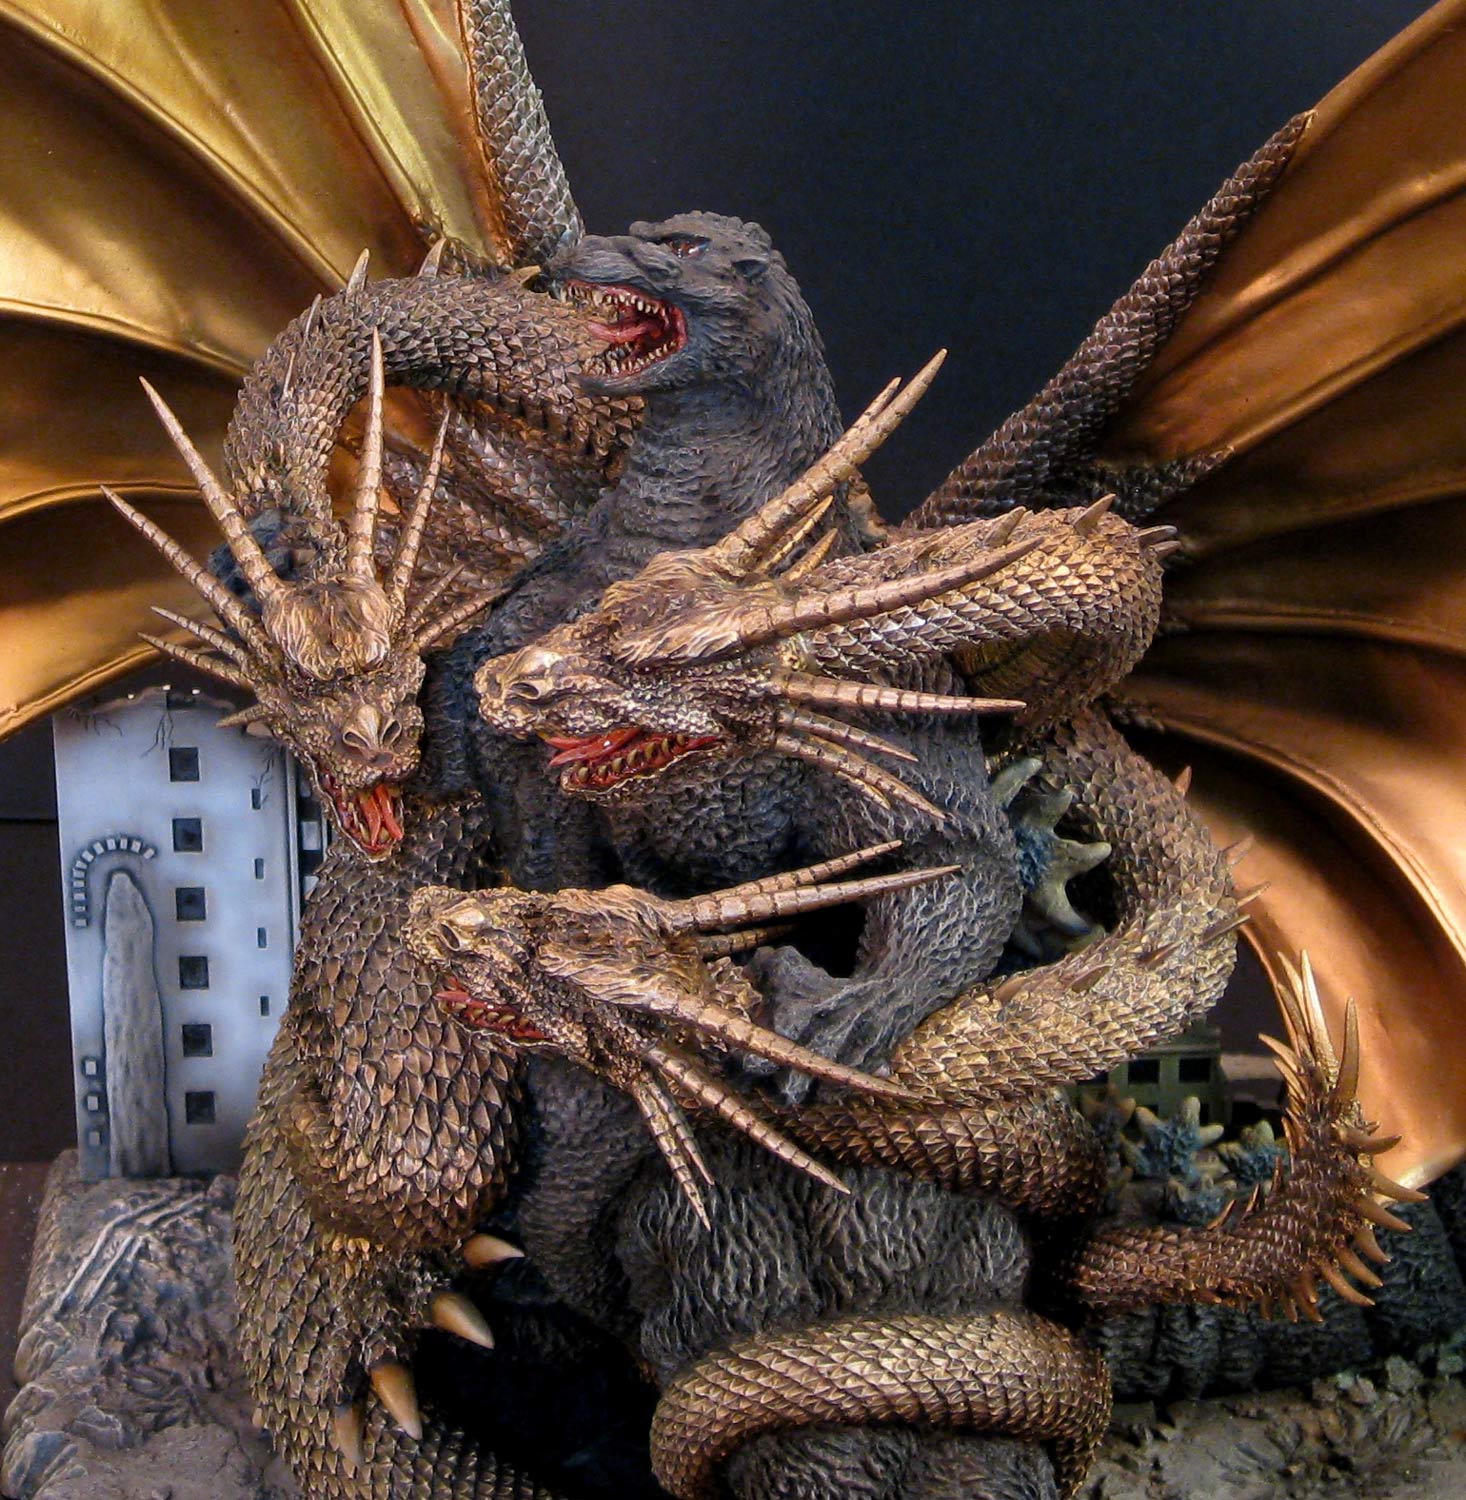 Godzilla Vs. King Ghidorah Backgrounds on Wallpapers Vista